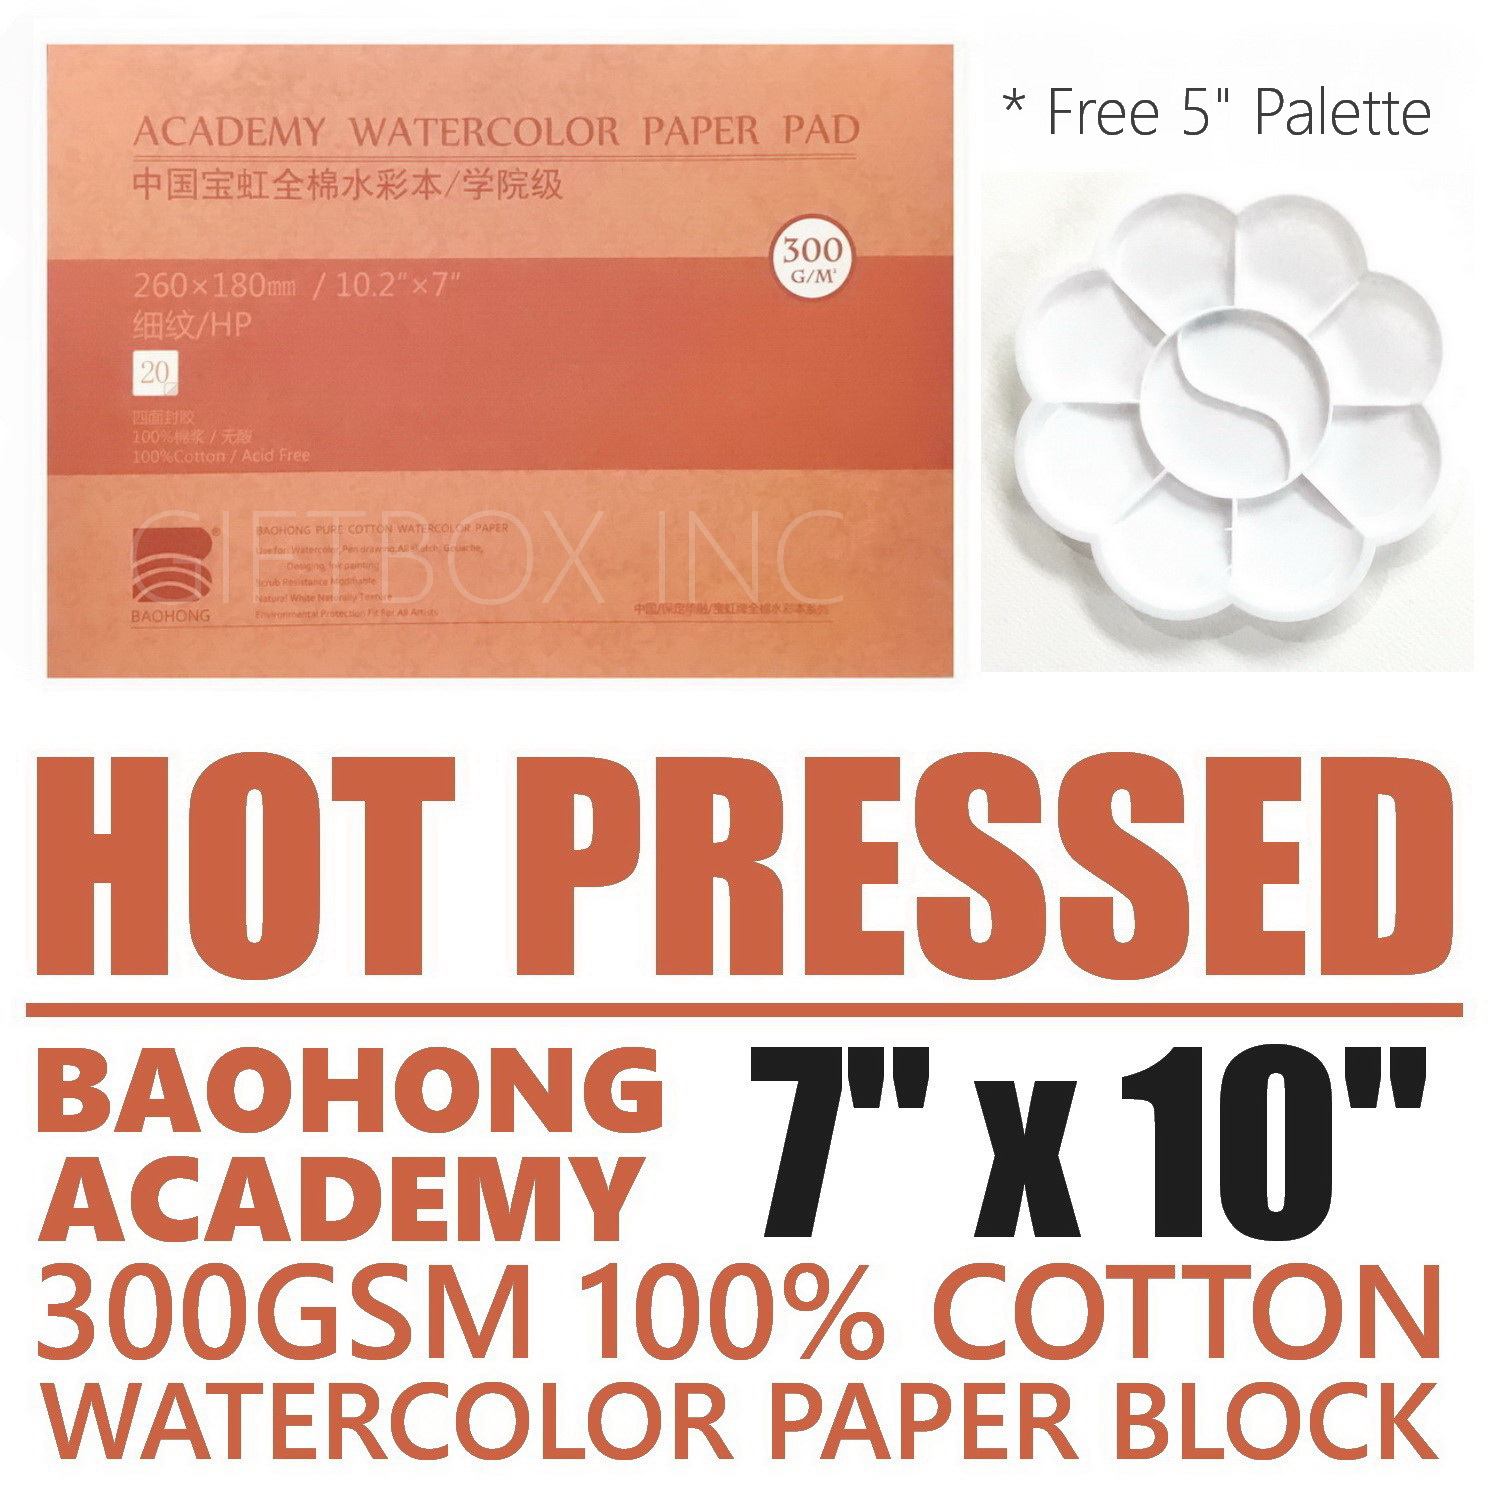 BAOHONG Academy Watercolor Paper 100% Cotton, 140lb/300gsm